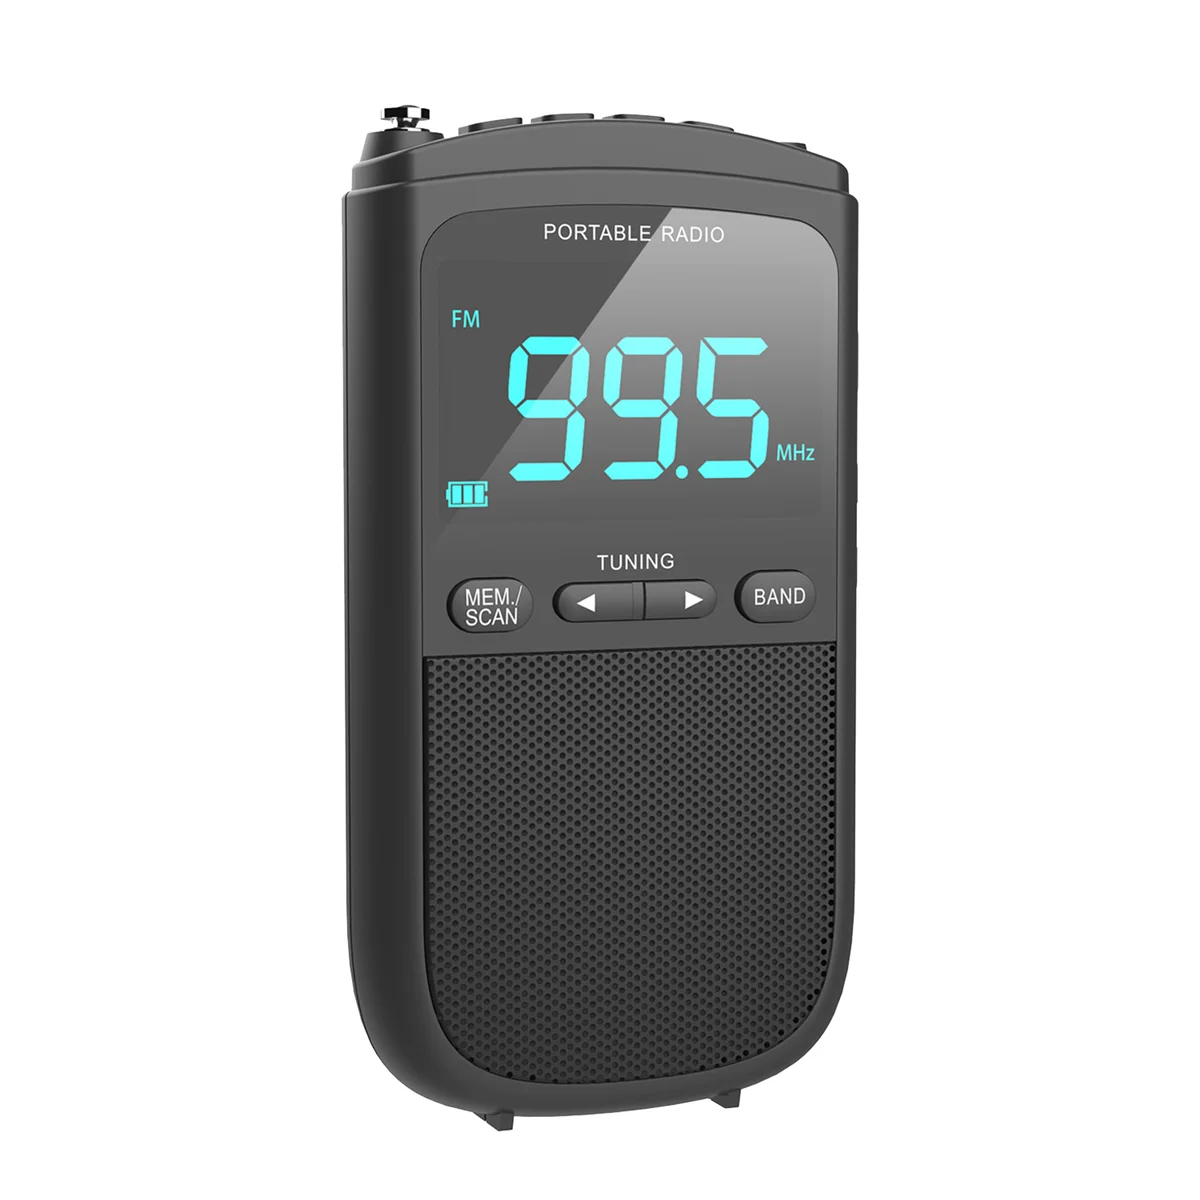 

Pocket AM FM Walkman Portable Transistor Radio with Digital Tuning, LCD Screen,Stereo Earphone Jack, Sleep Timer